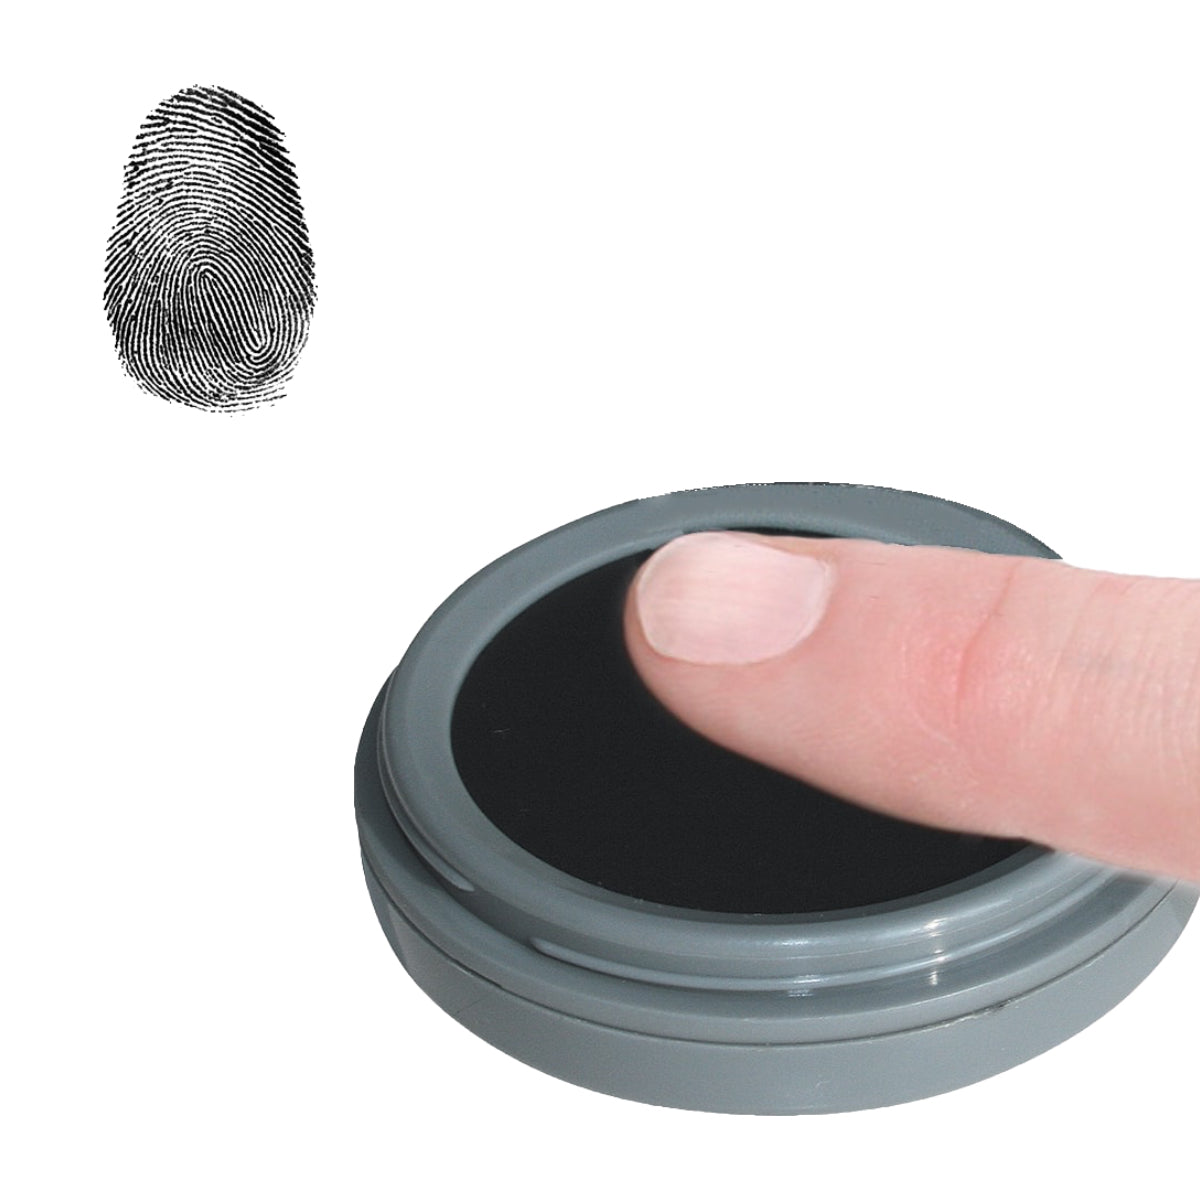 fingerprint pad